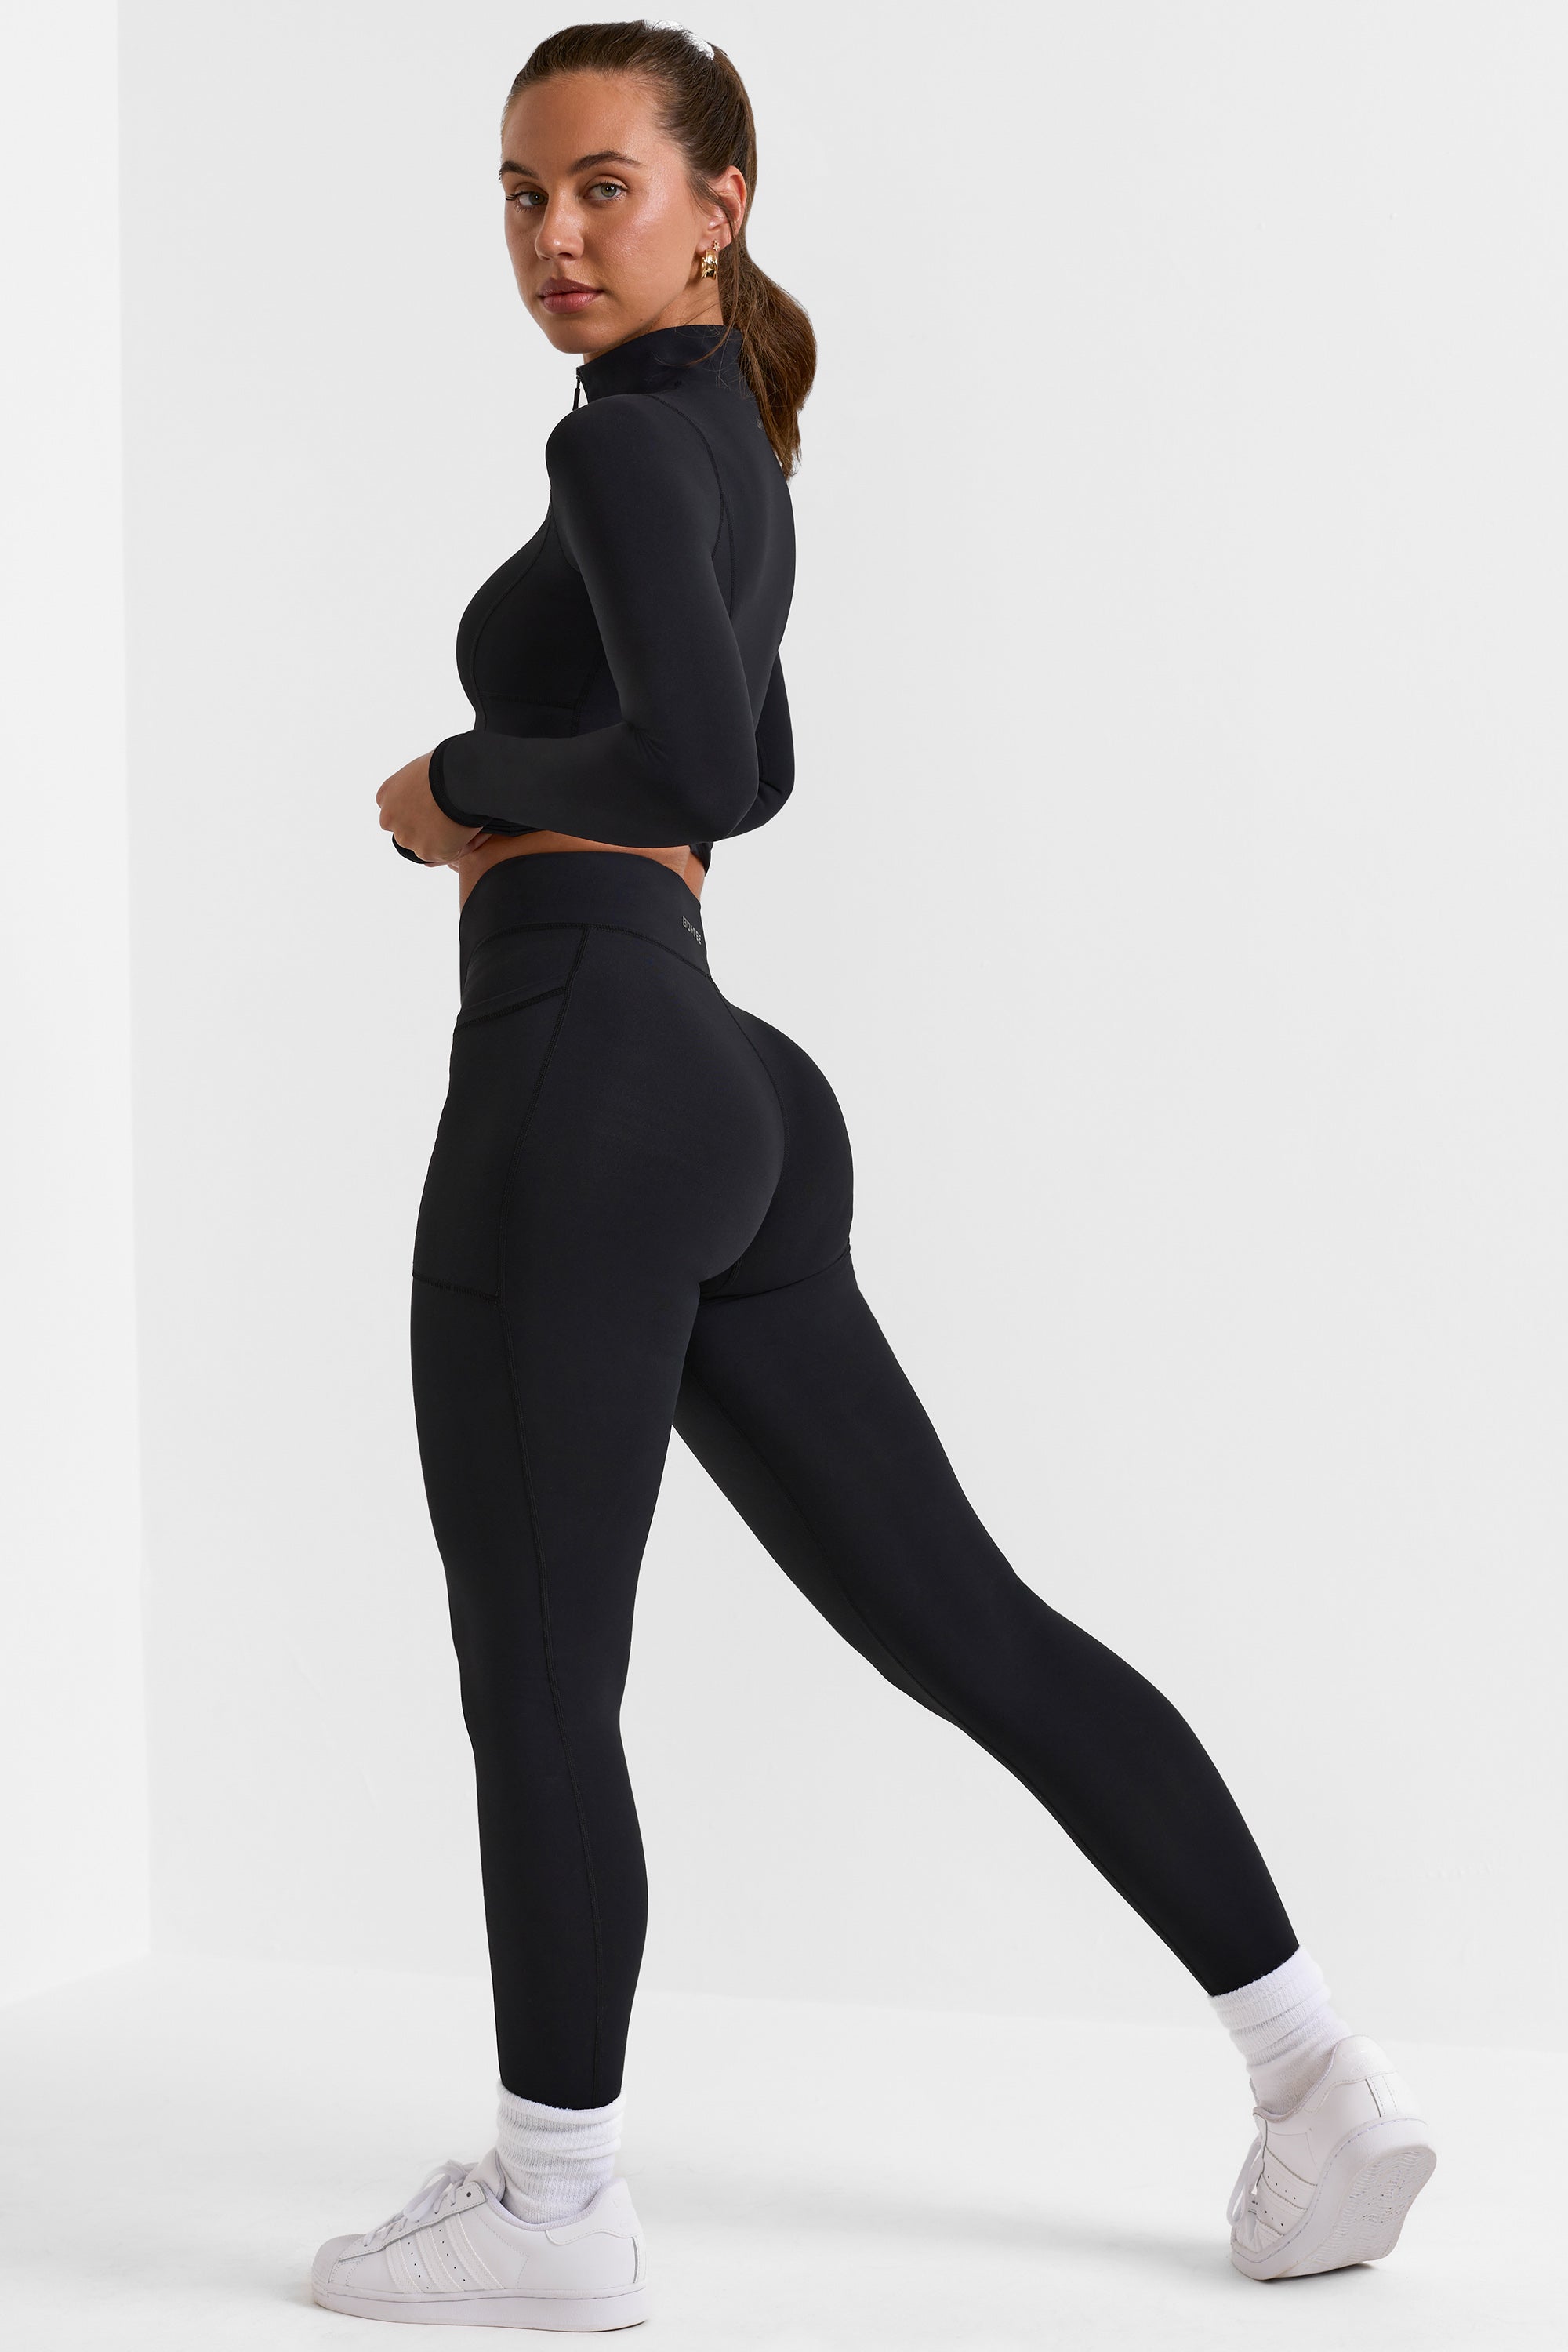 GYMSHARK X KK FIT SHORTS 💗  Gym shorts womens, Clothes design